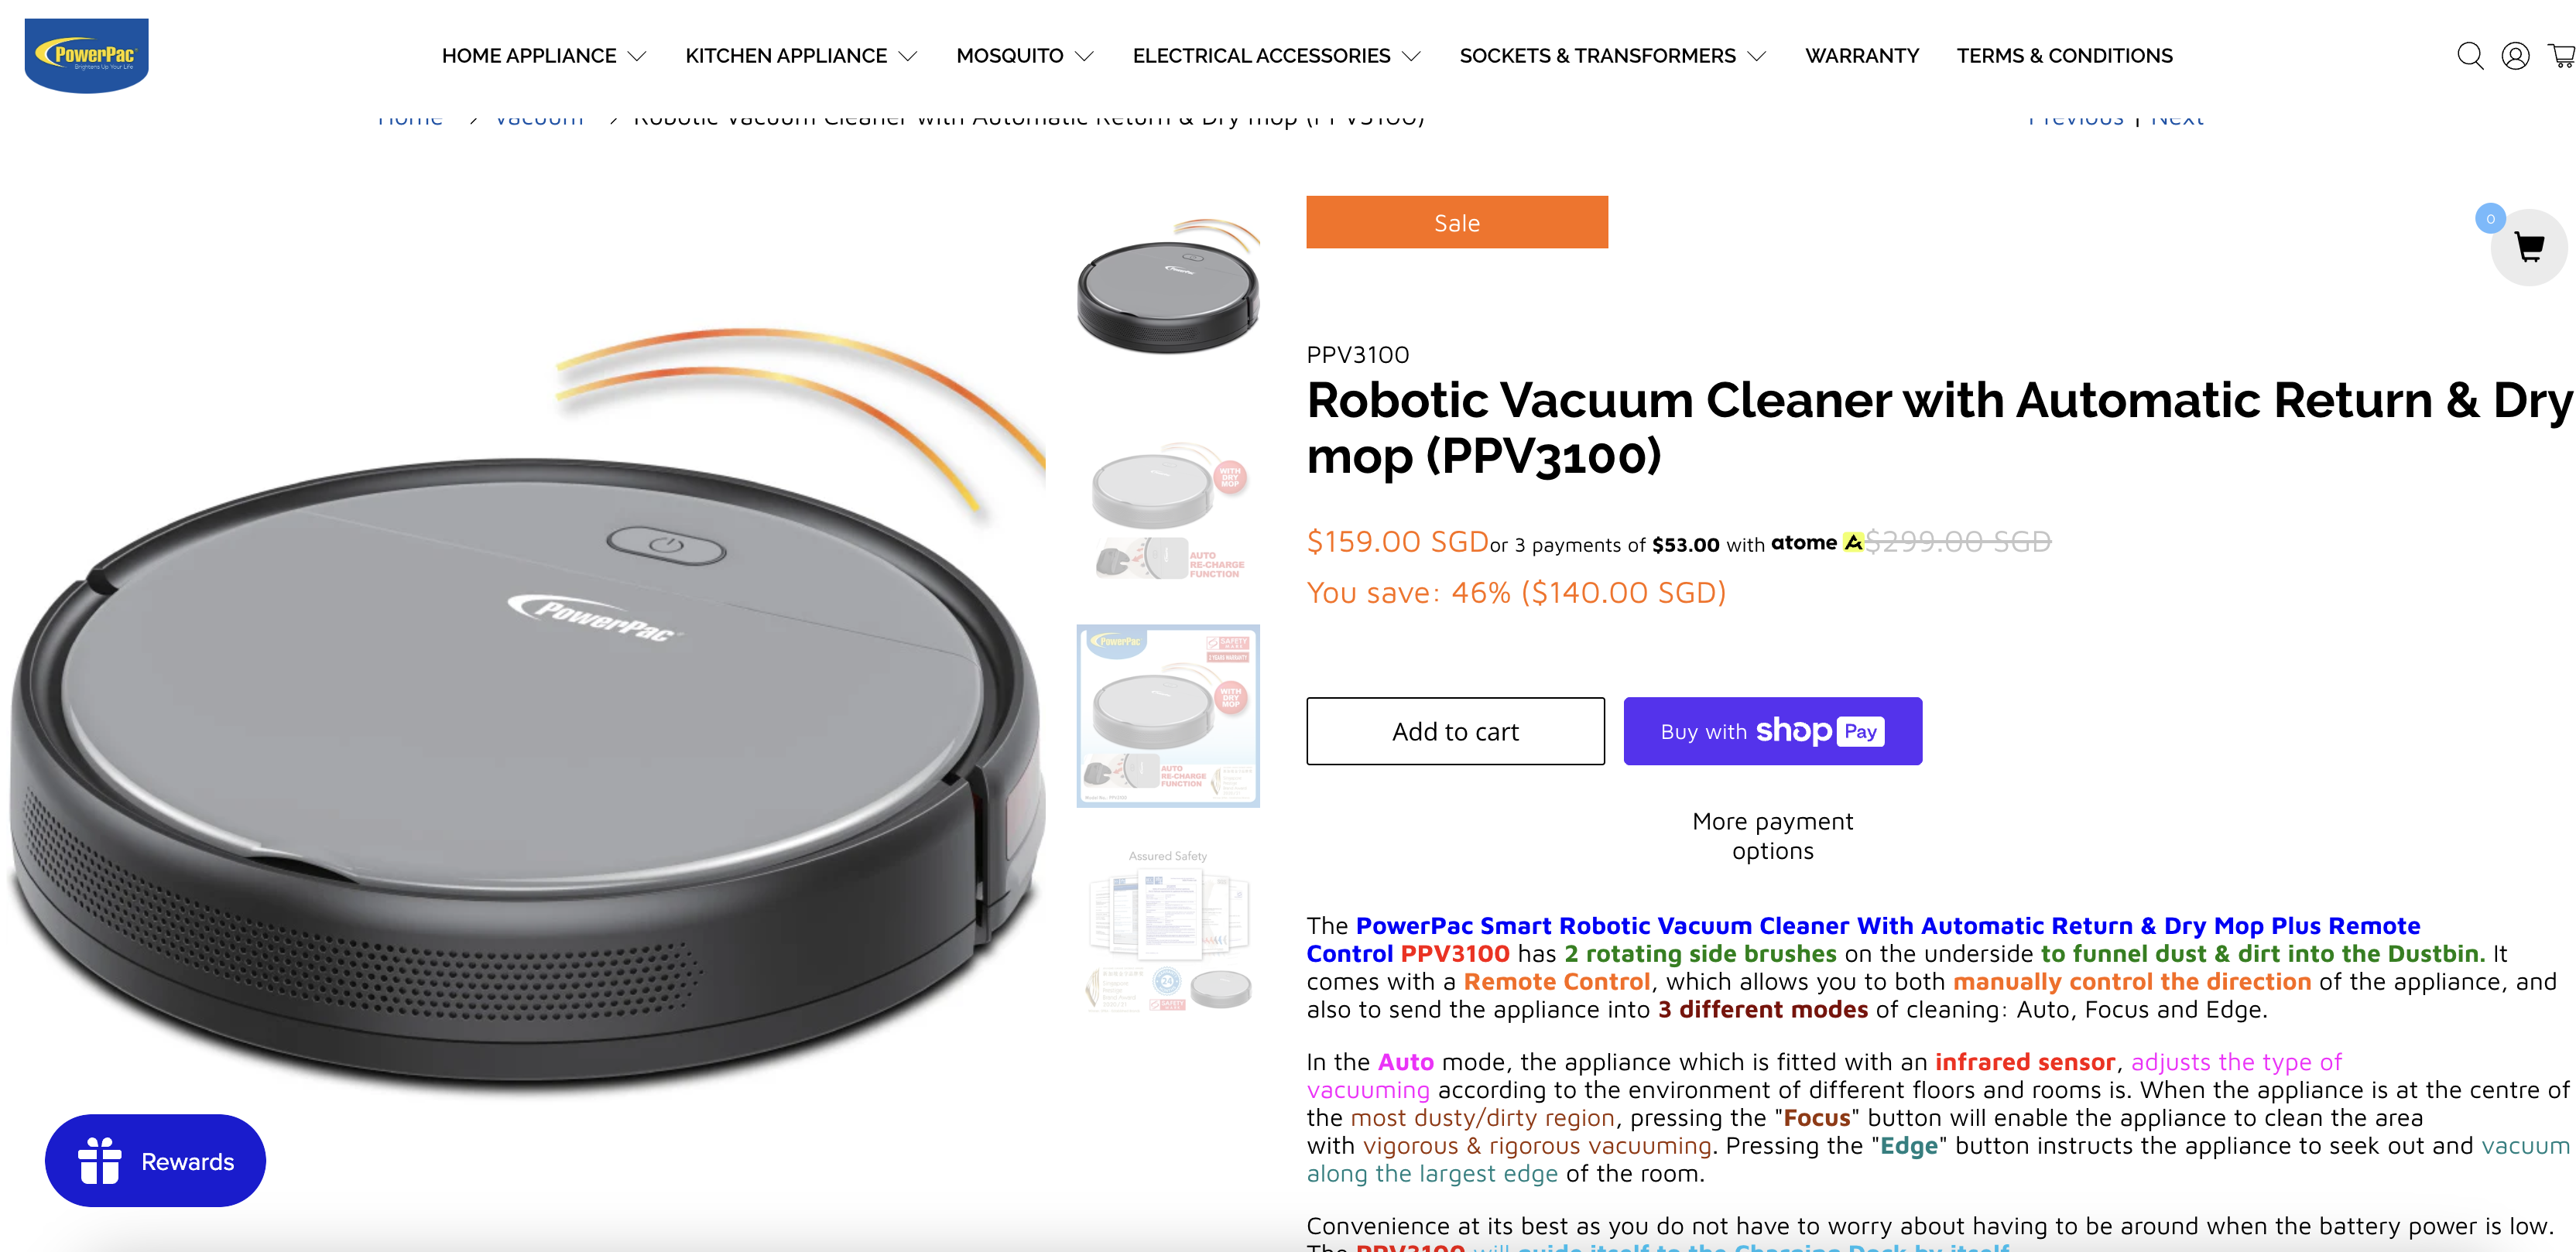 PowerPac Robotic Vacuum Cleaner